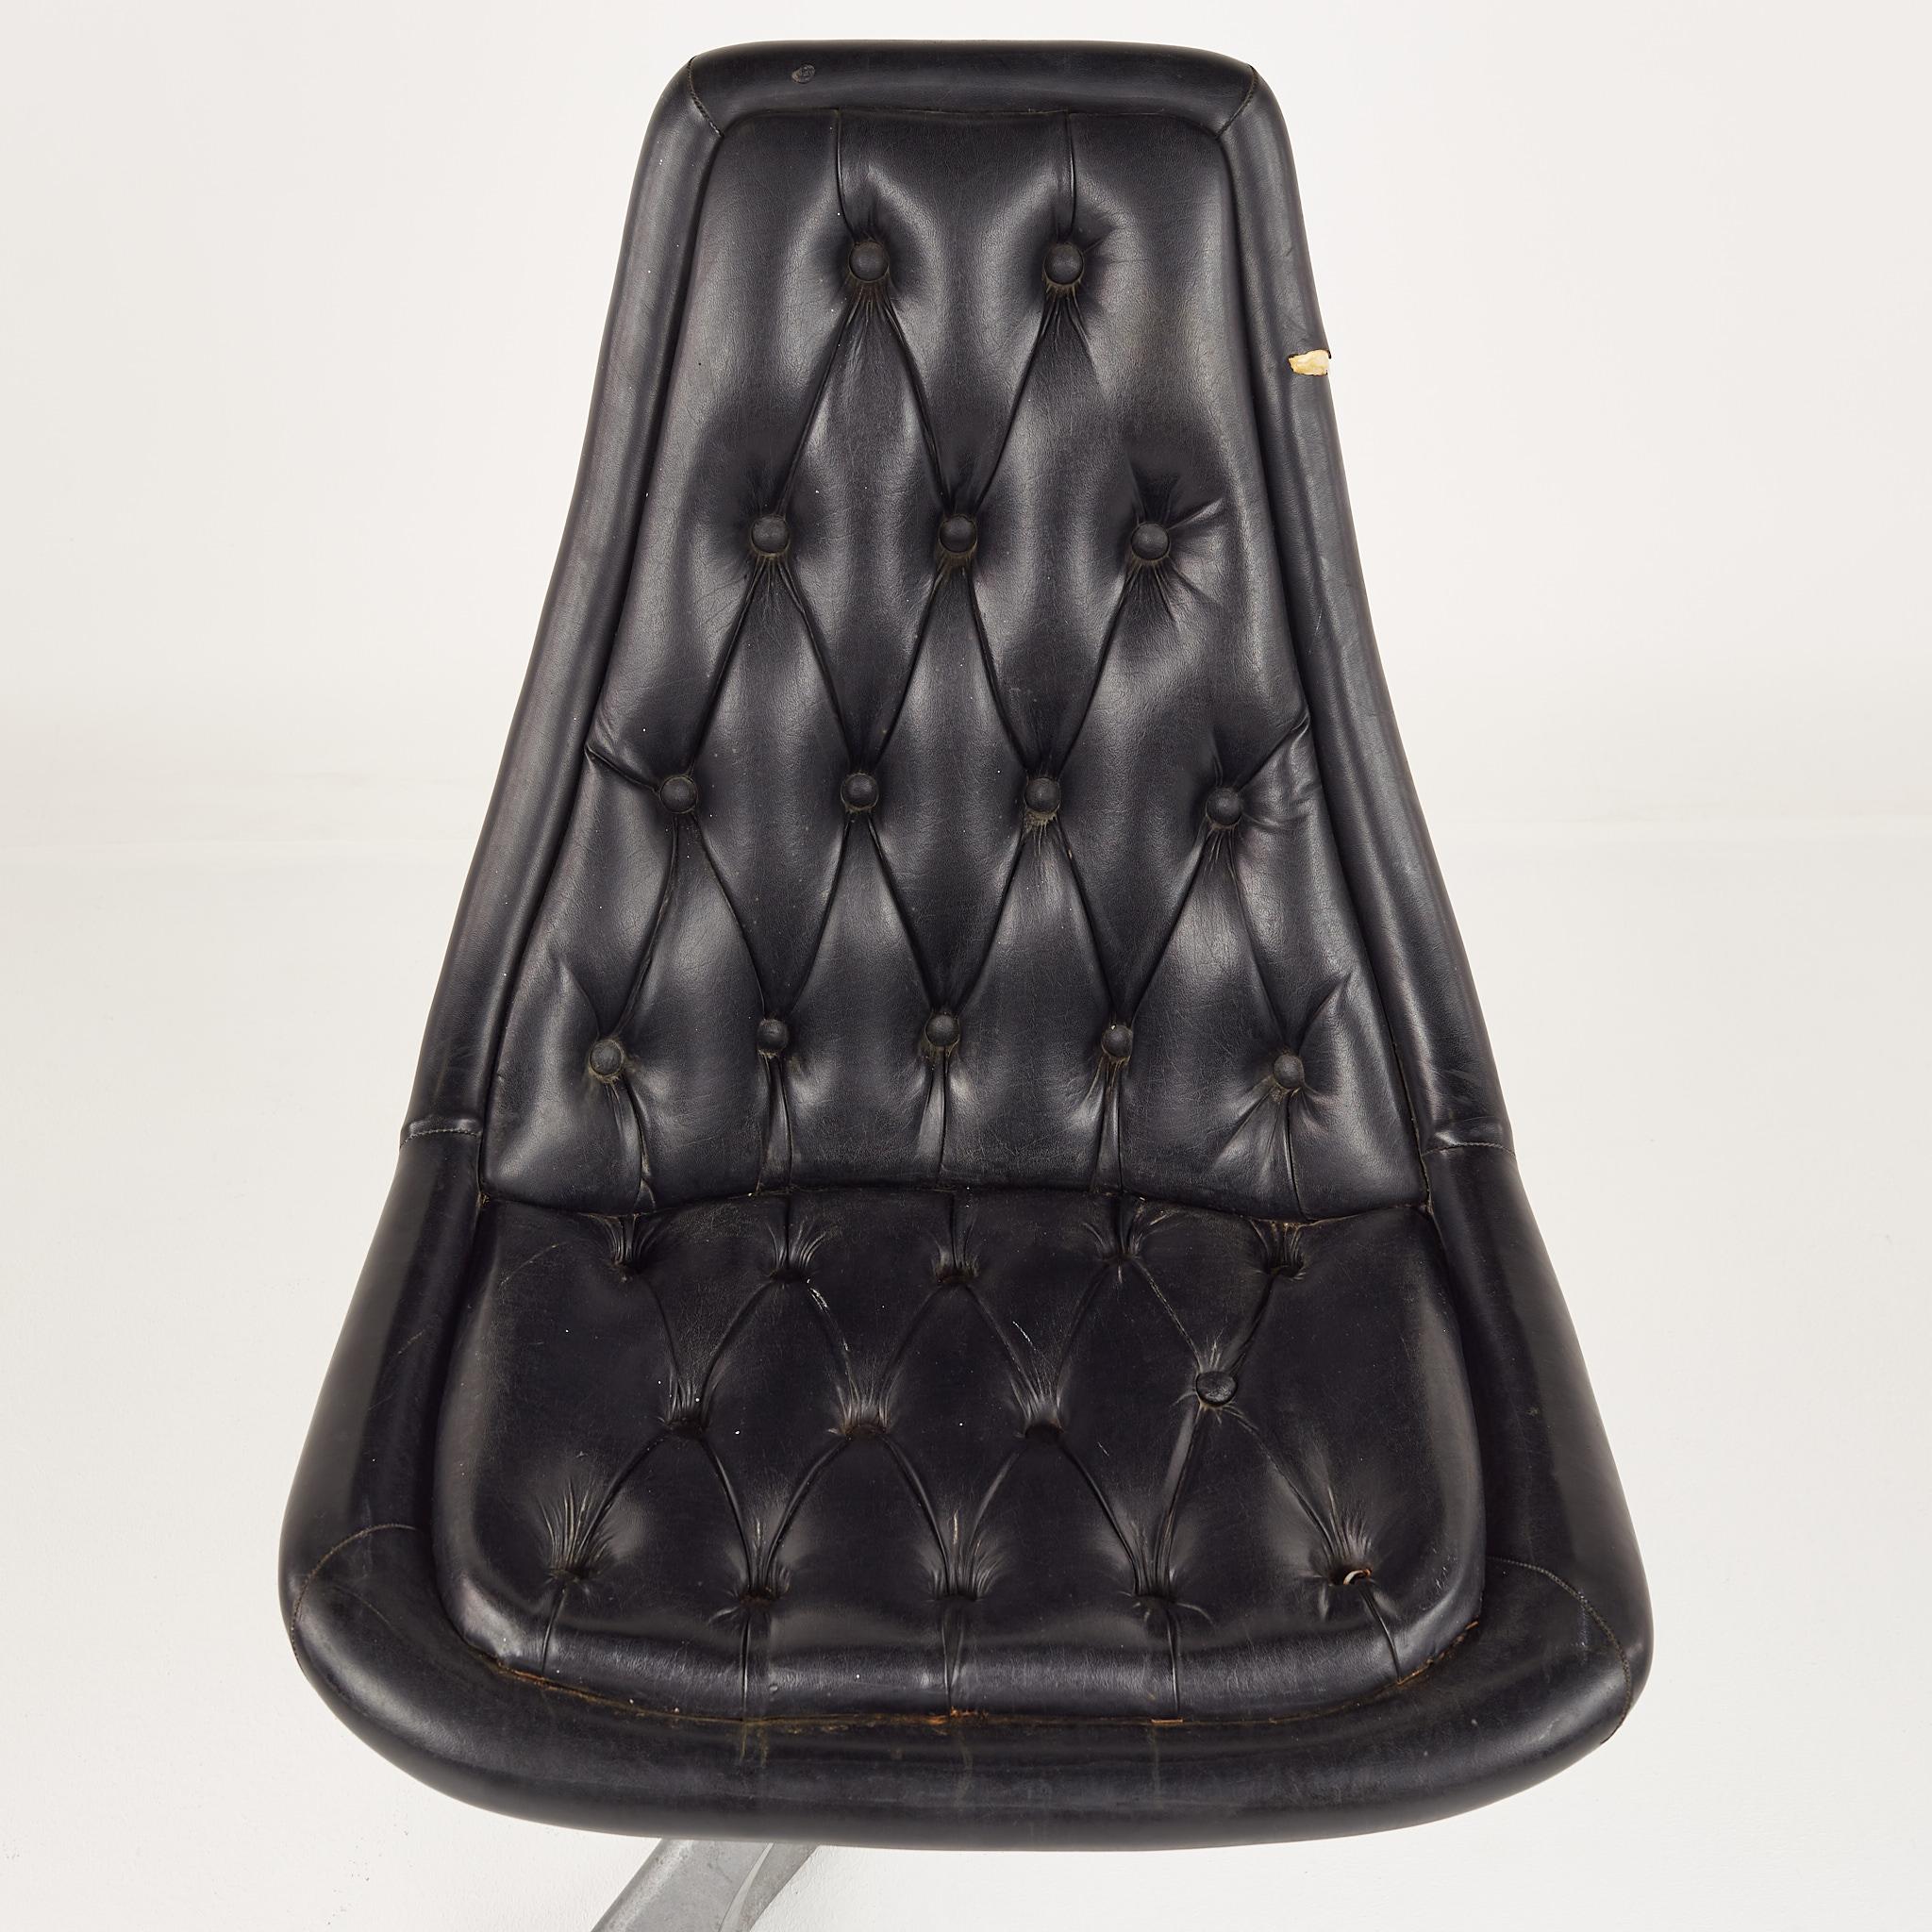 Metal Chromcraft Sculpta Mid-Century Star Trek Chairs, Pair For Sale